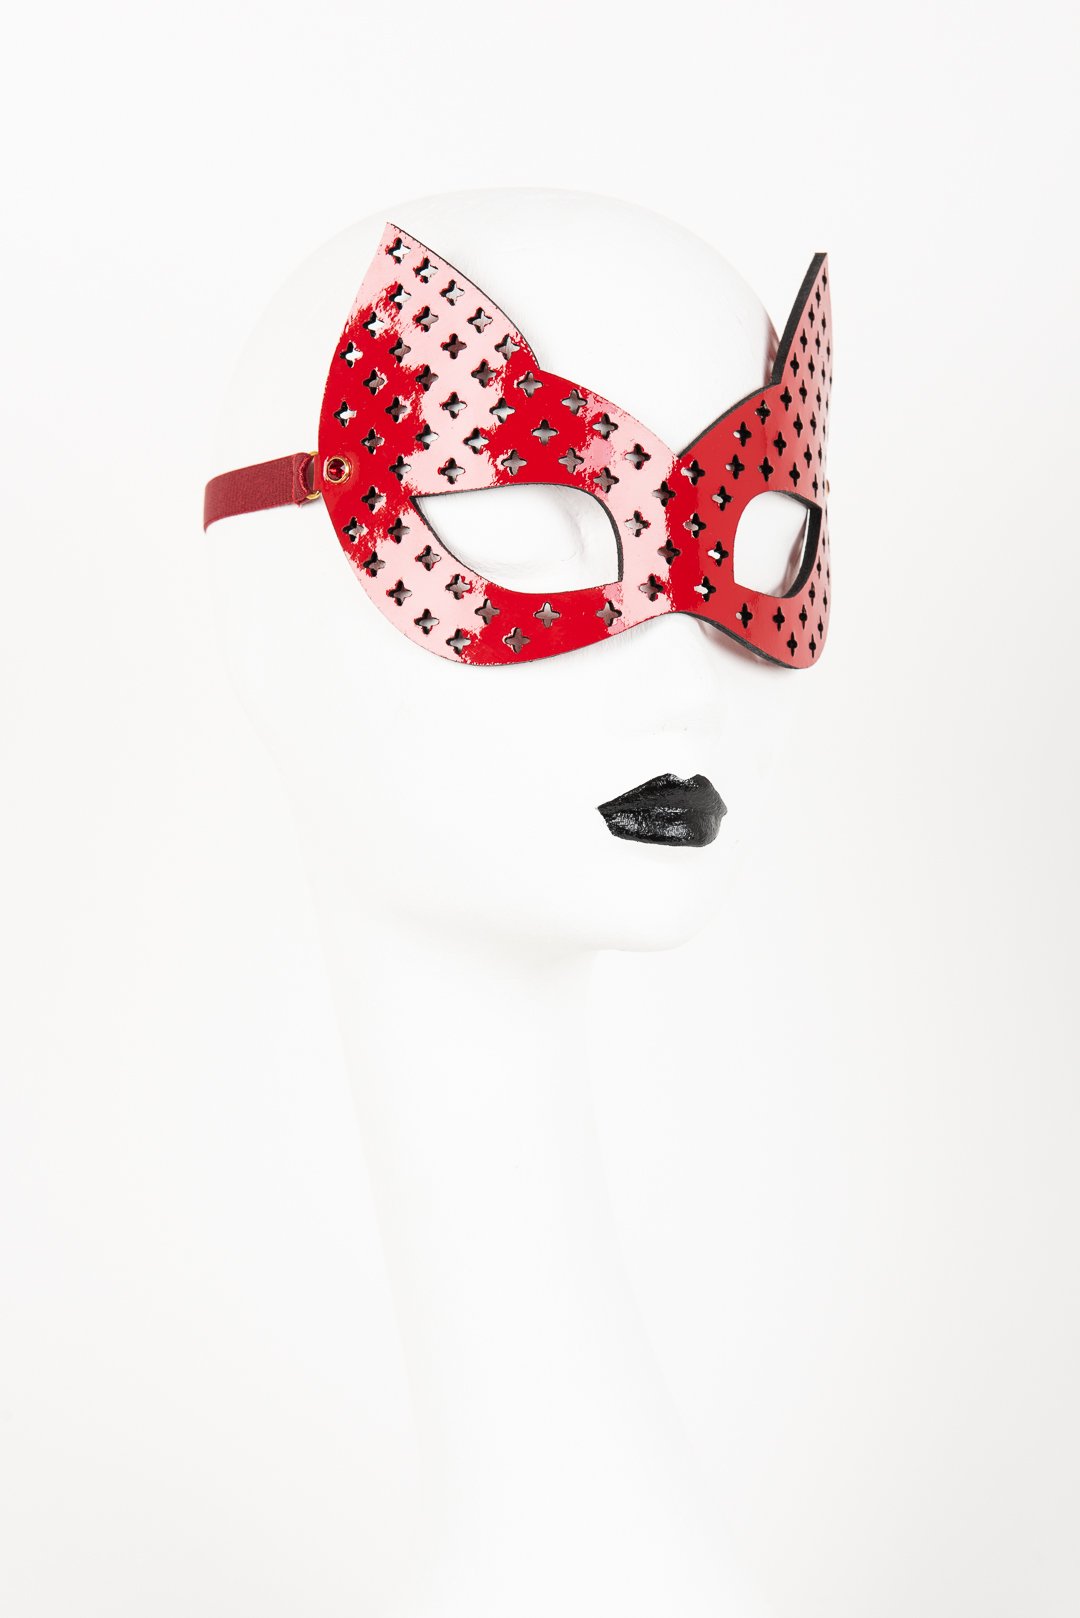 Luxury Patent Leather Kitten Mask Buy Online at Fraulein Kink